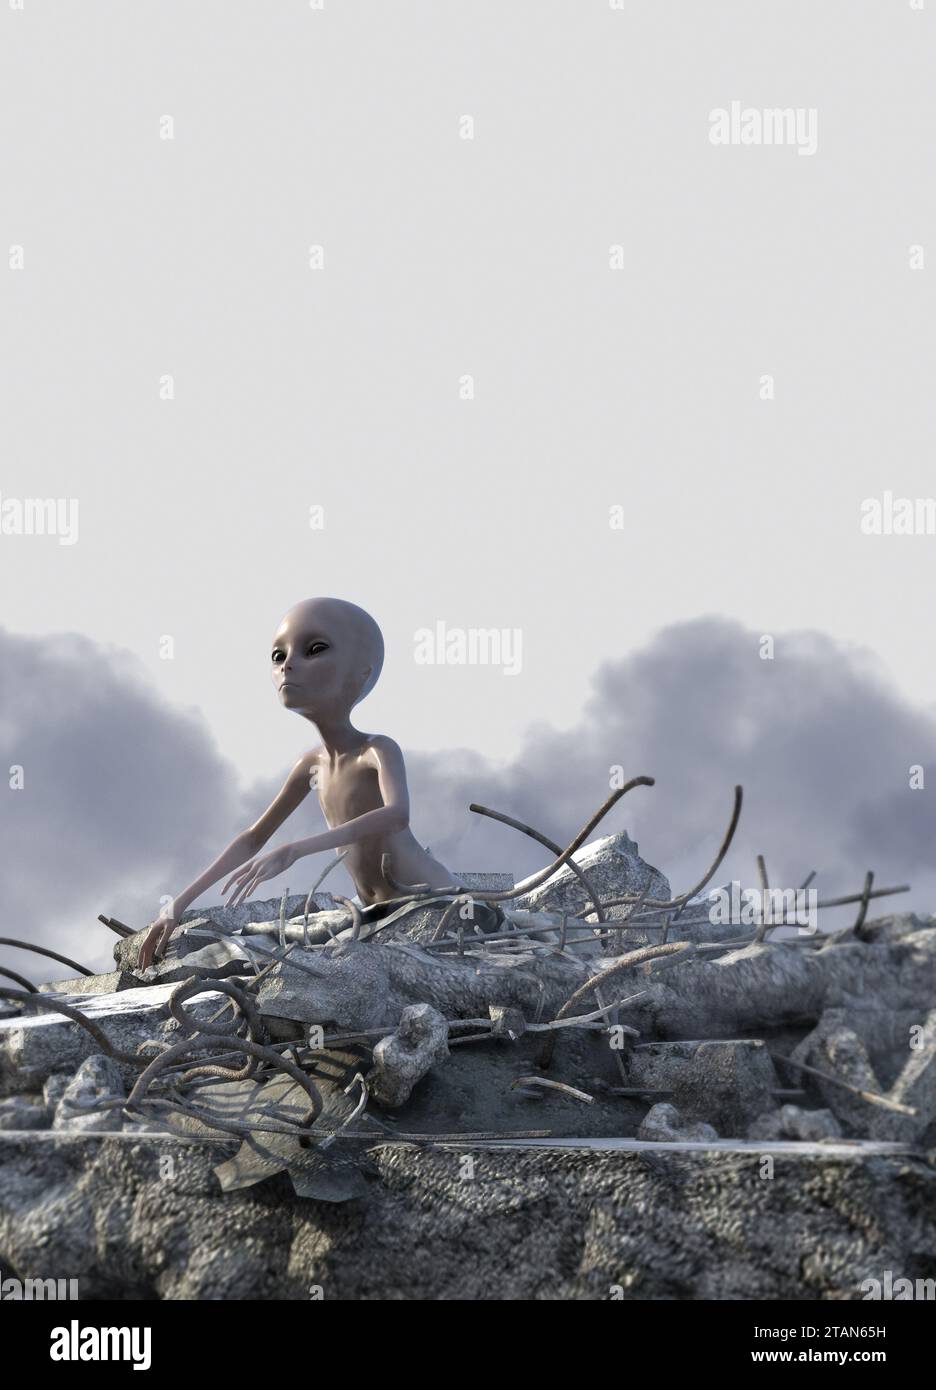 Alien amongst rubble, illustration Stock Photo